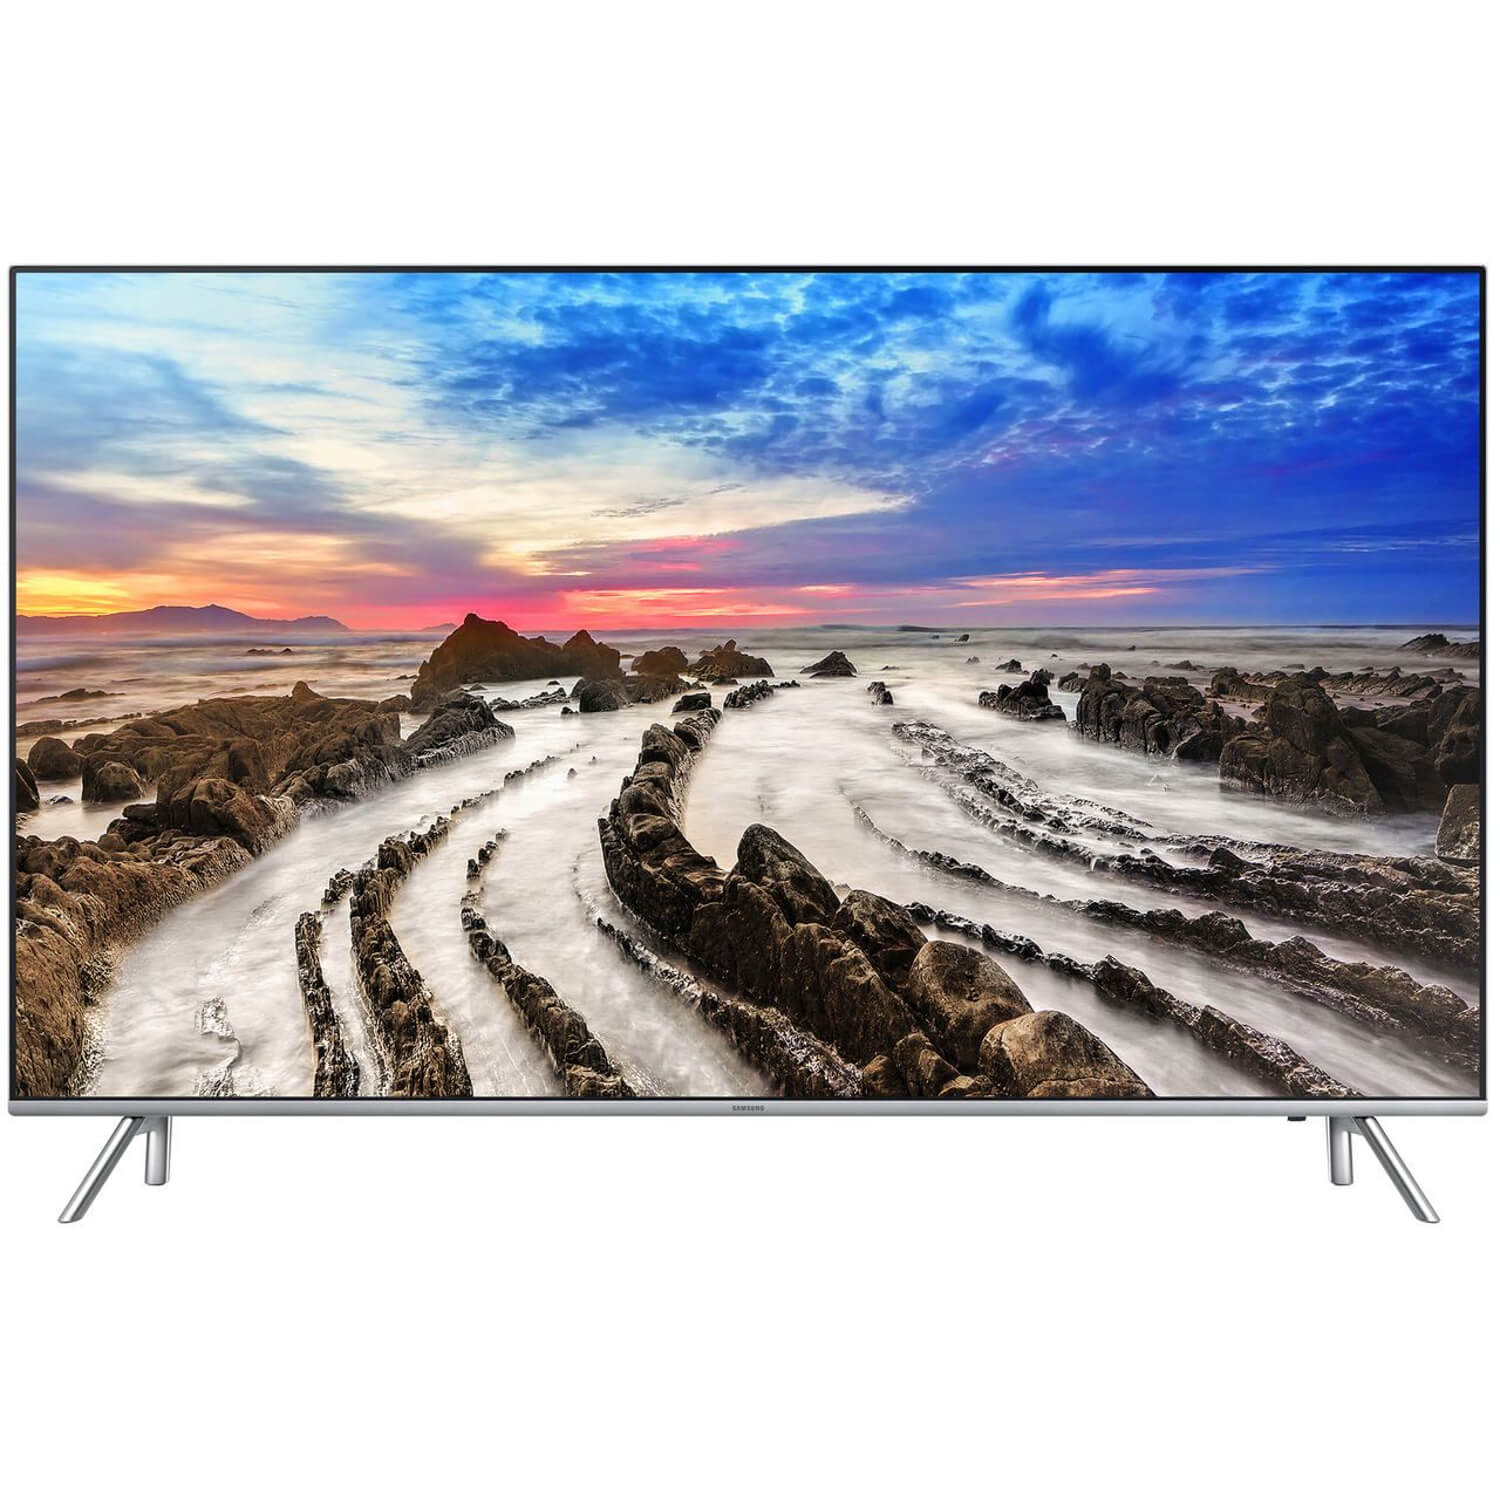  Televizor Smart LED, Samsung 55MU7002, 138 cm, Ultra HD 4K 